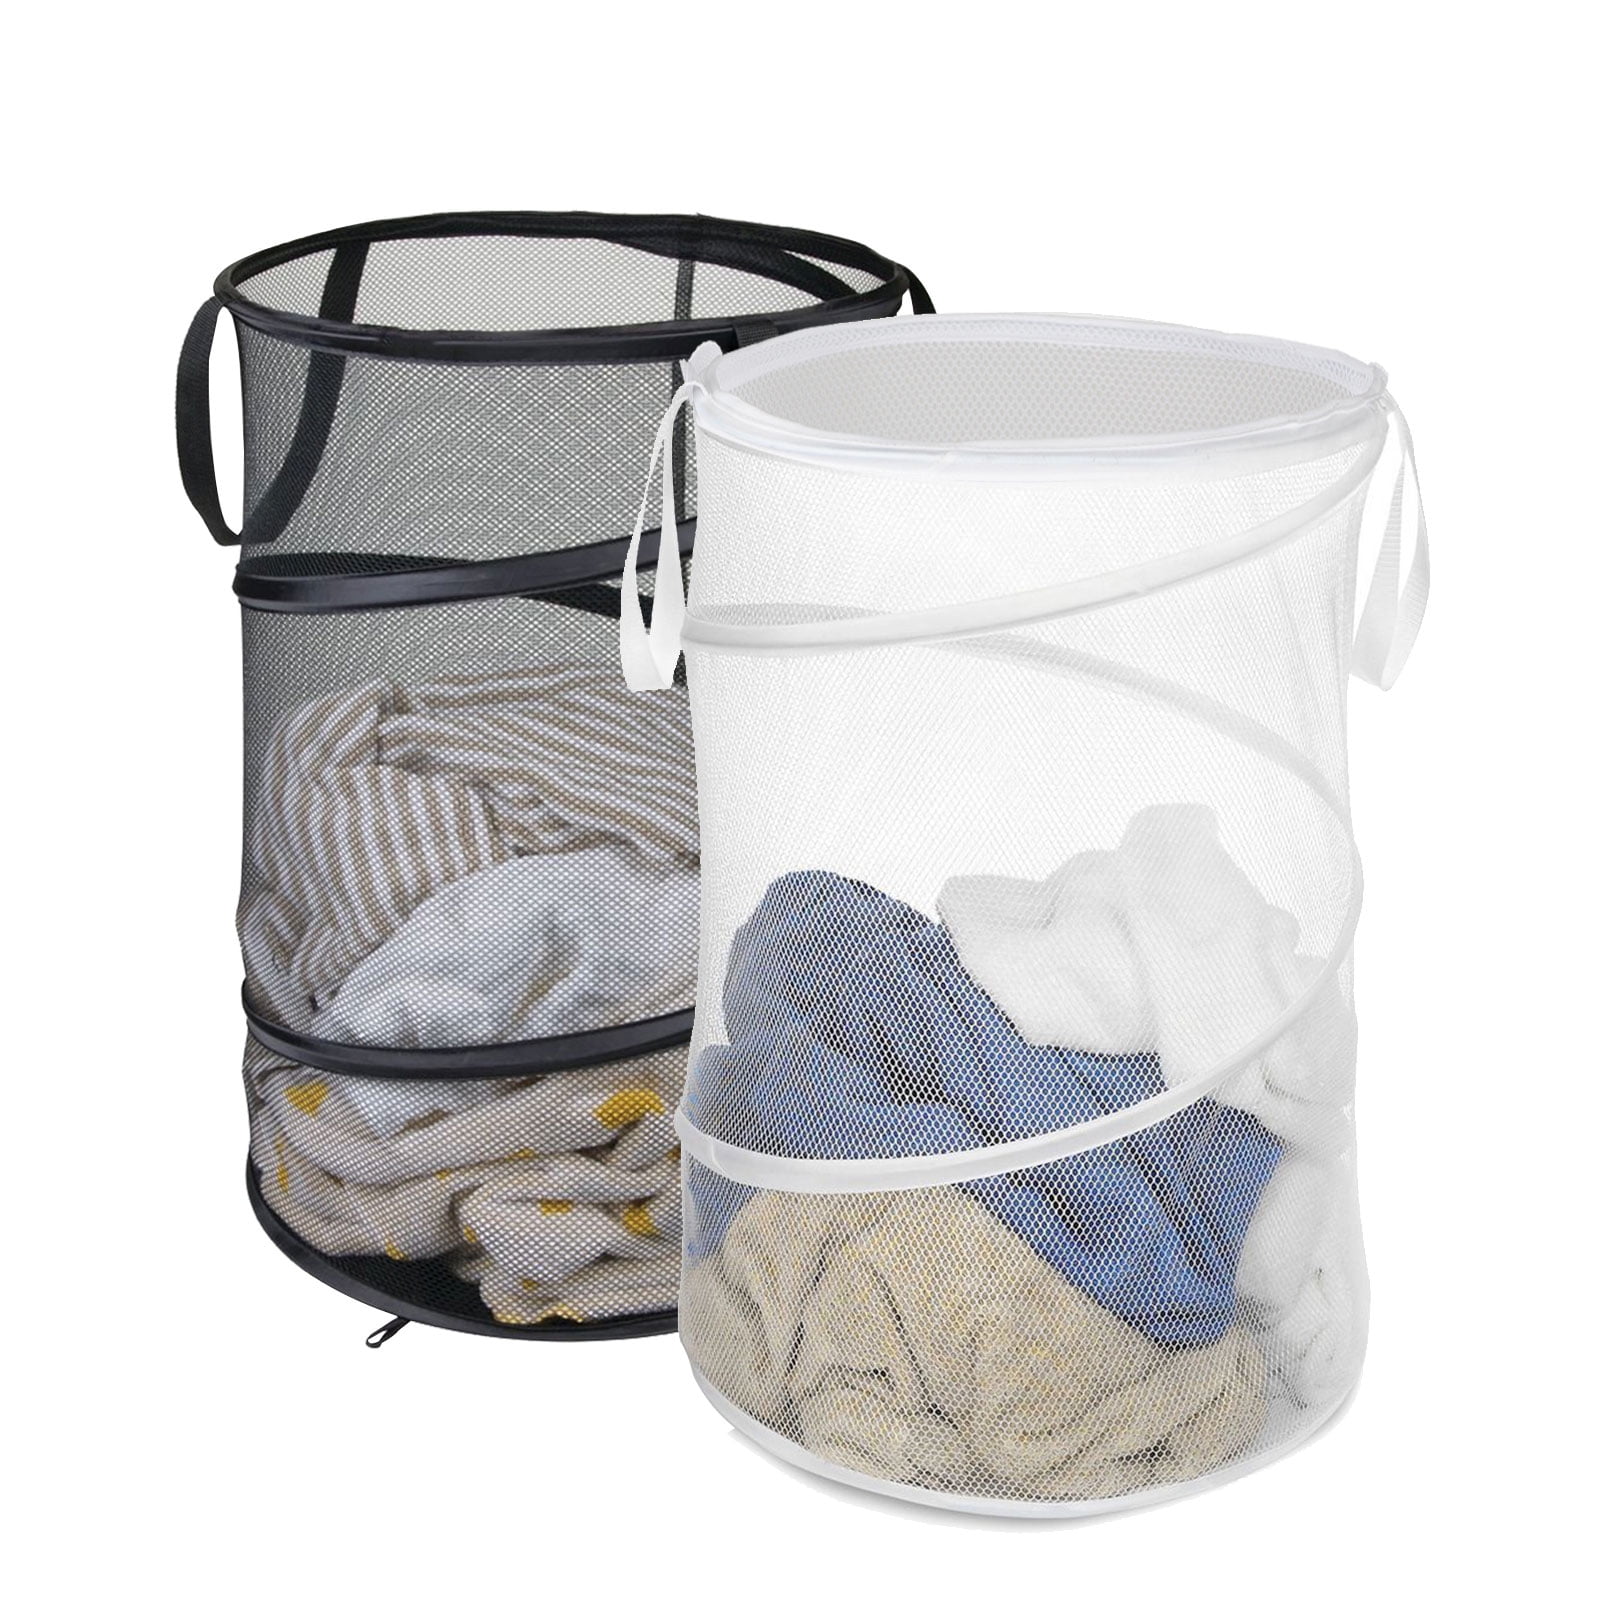 Portable Laundry Basket Dirty Clothes Toy Storage Bag Hamper Foldable W/ Wheel